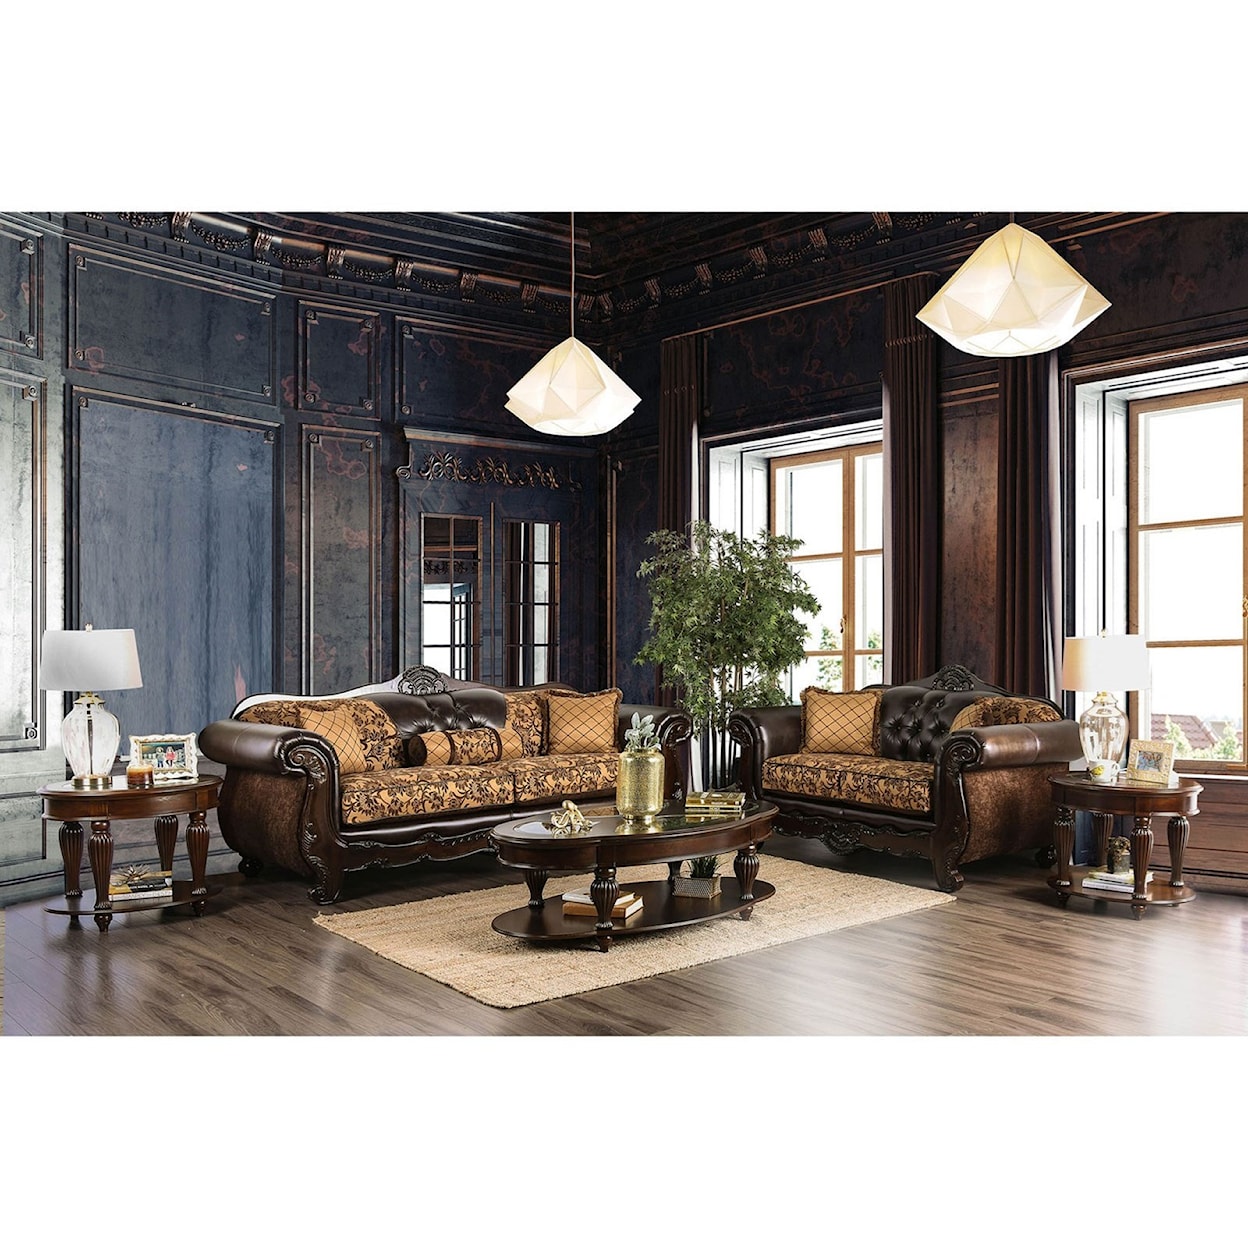 Furniture of America Quirino Sofa